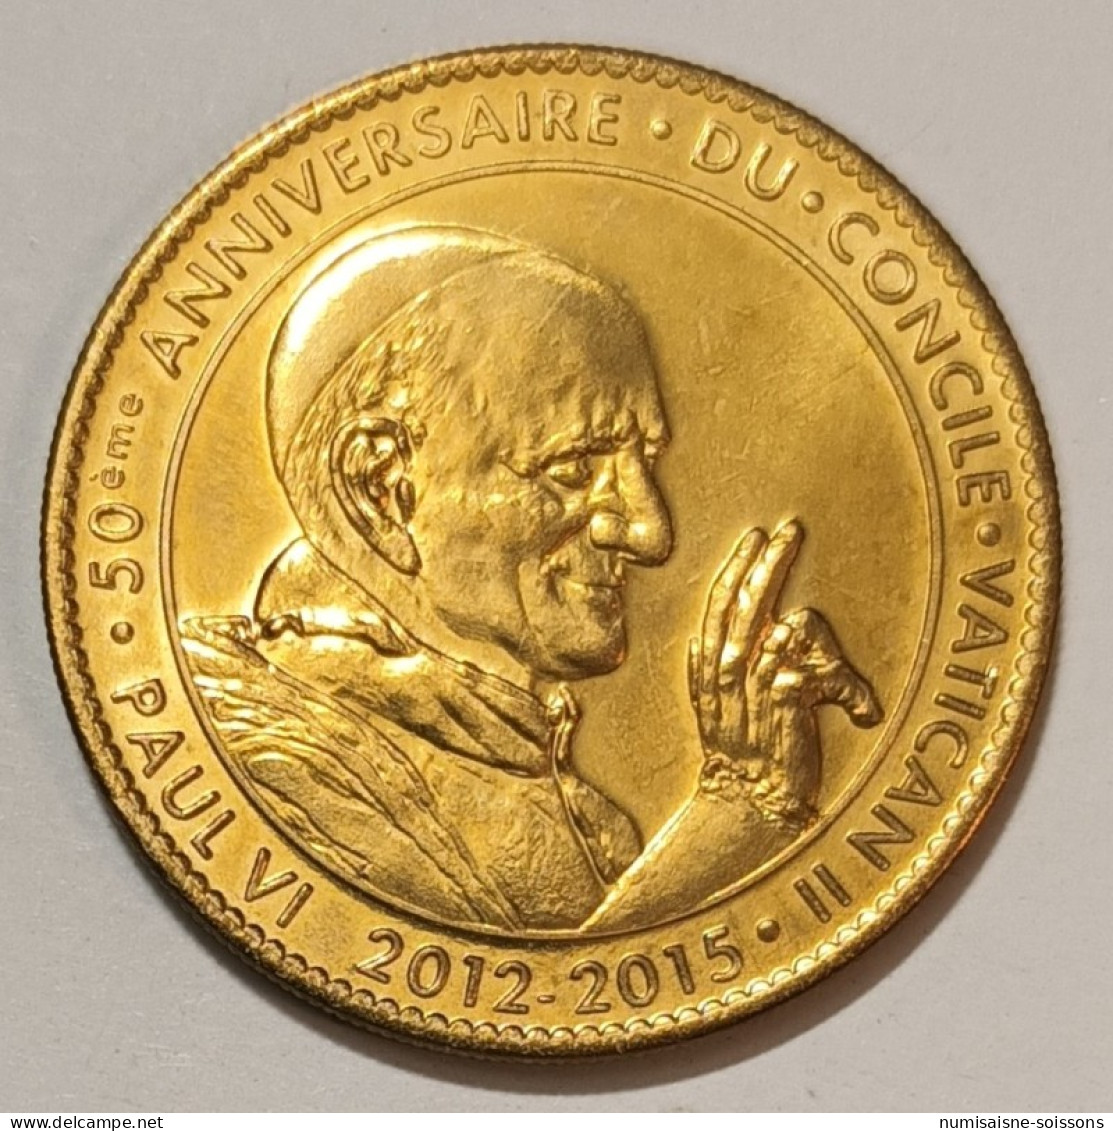 65 - Lourdes - 50 Ans Du Concile - Vatican II - Paul VI - Jean XXIII - 2012-2015 - Arthus Bertrand - 2015